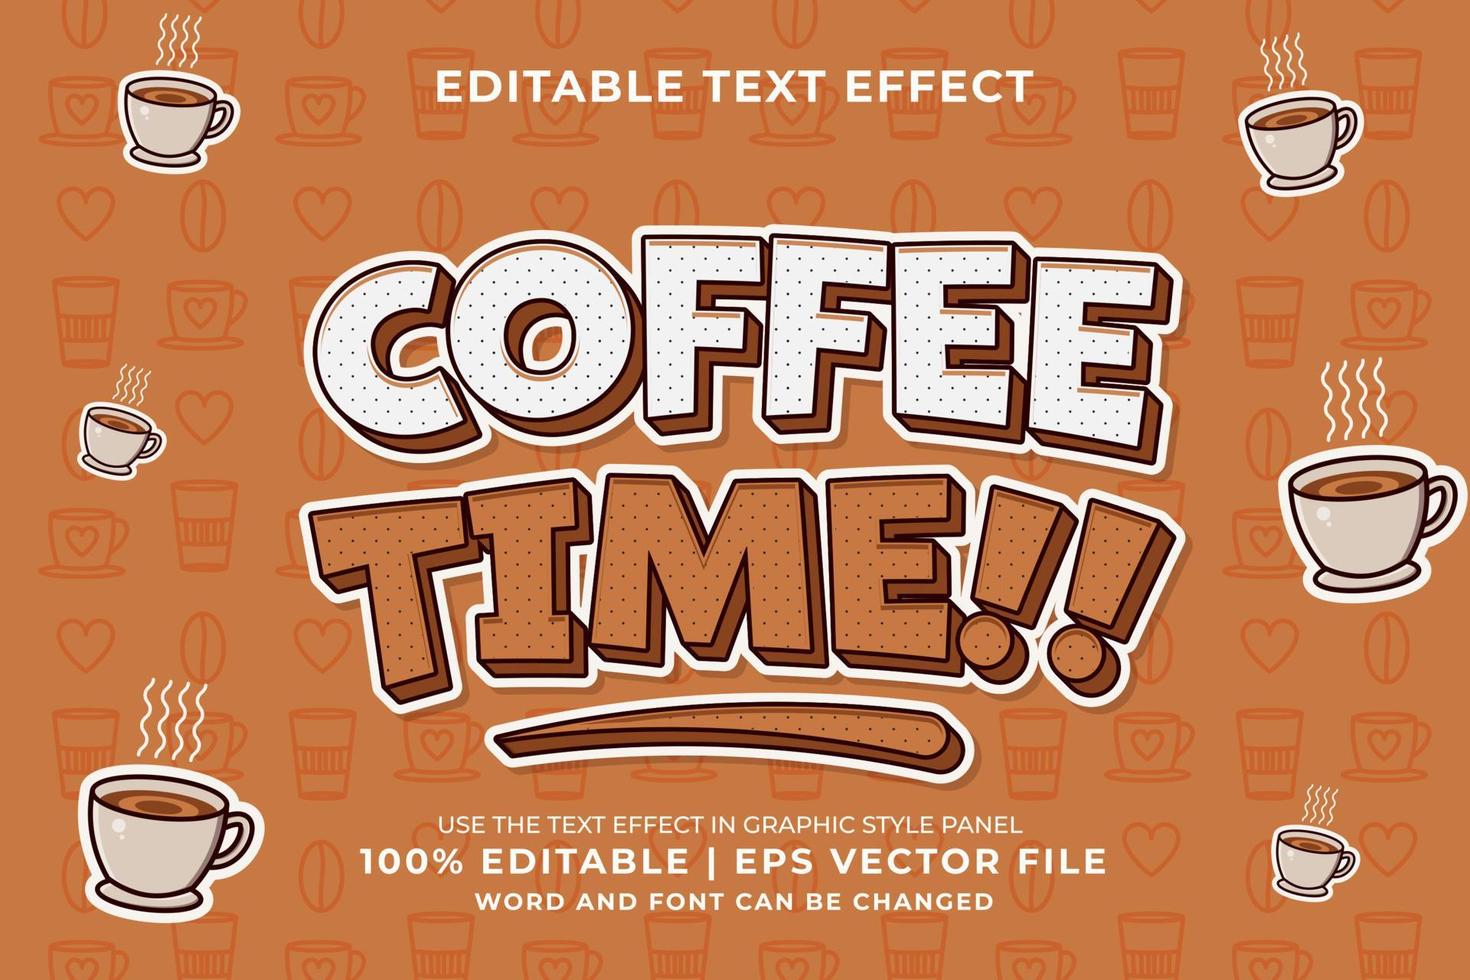 Editable text effect - Coffee Break Cartoon template style premium vector